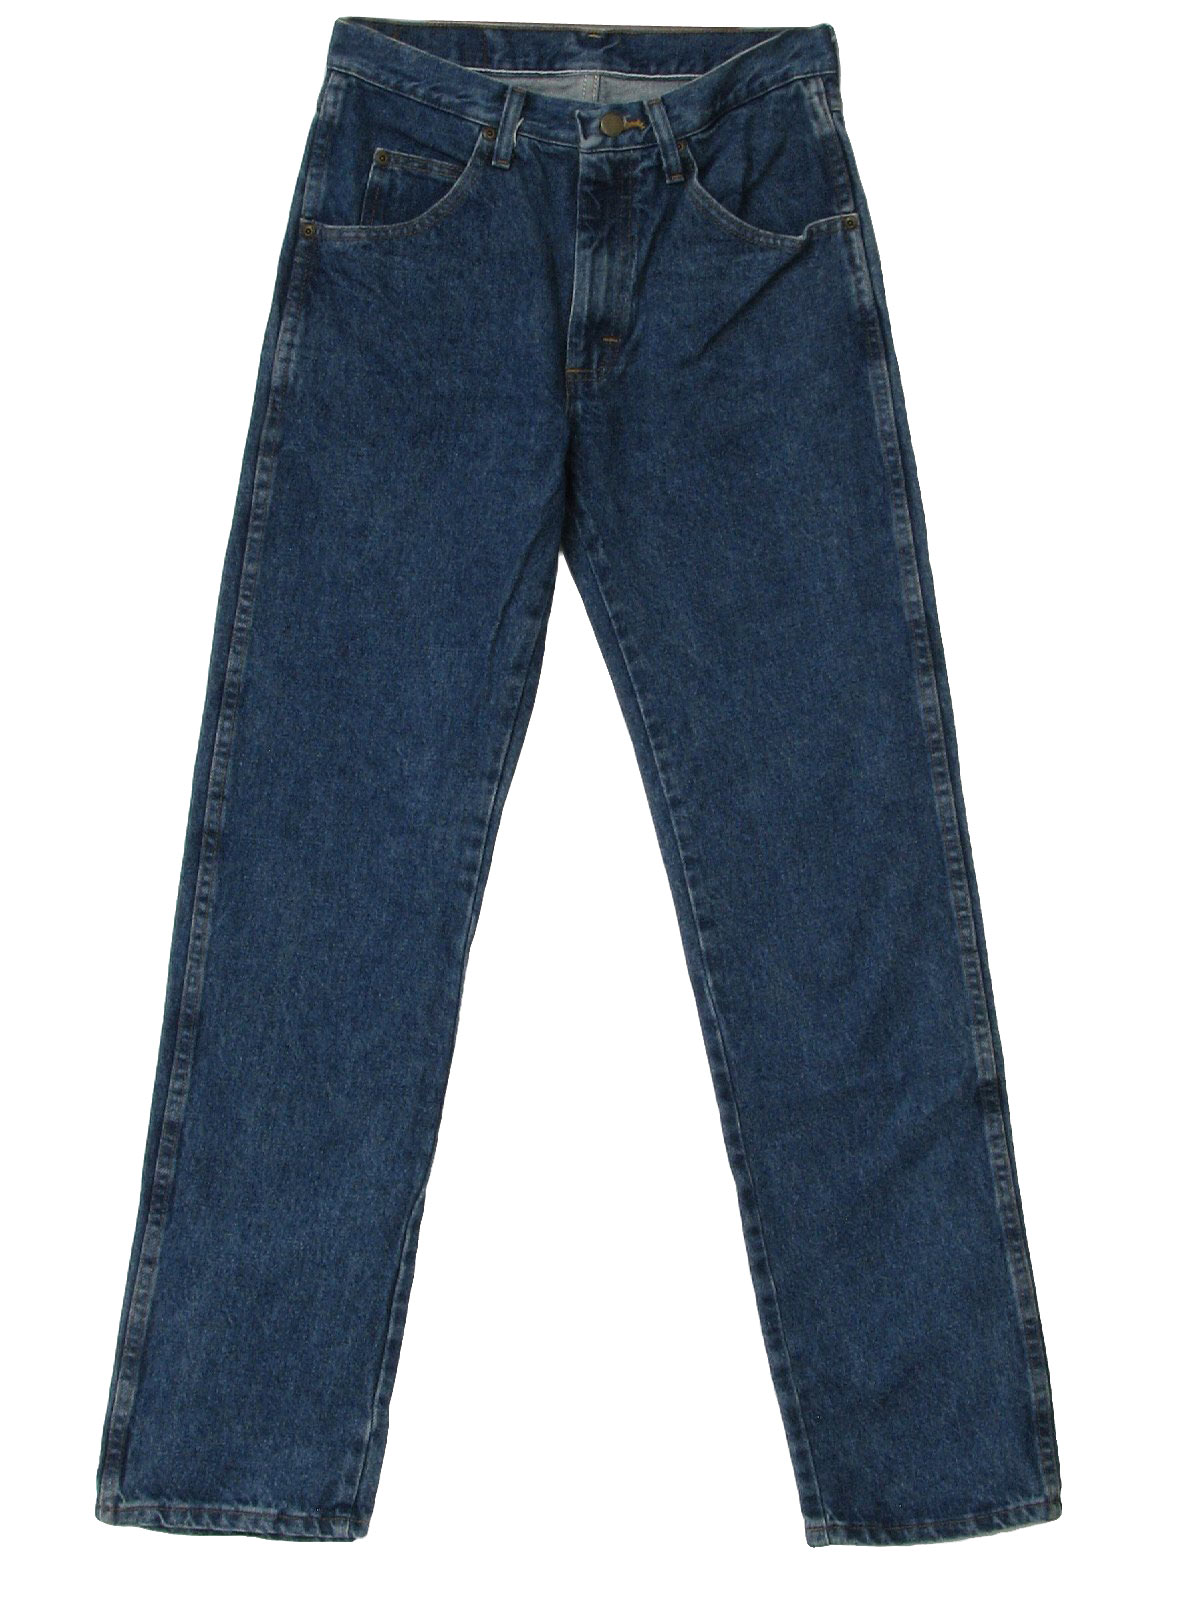 90S jeans popular